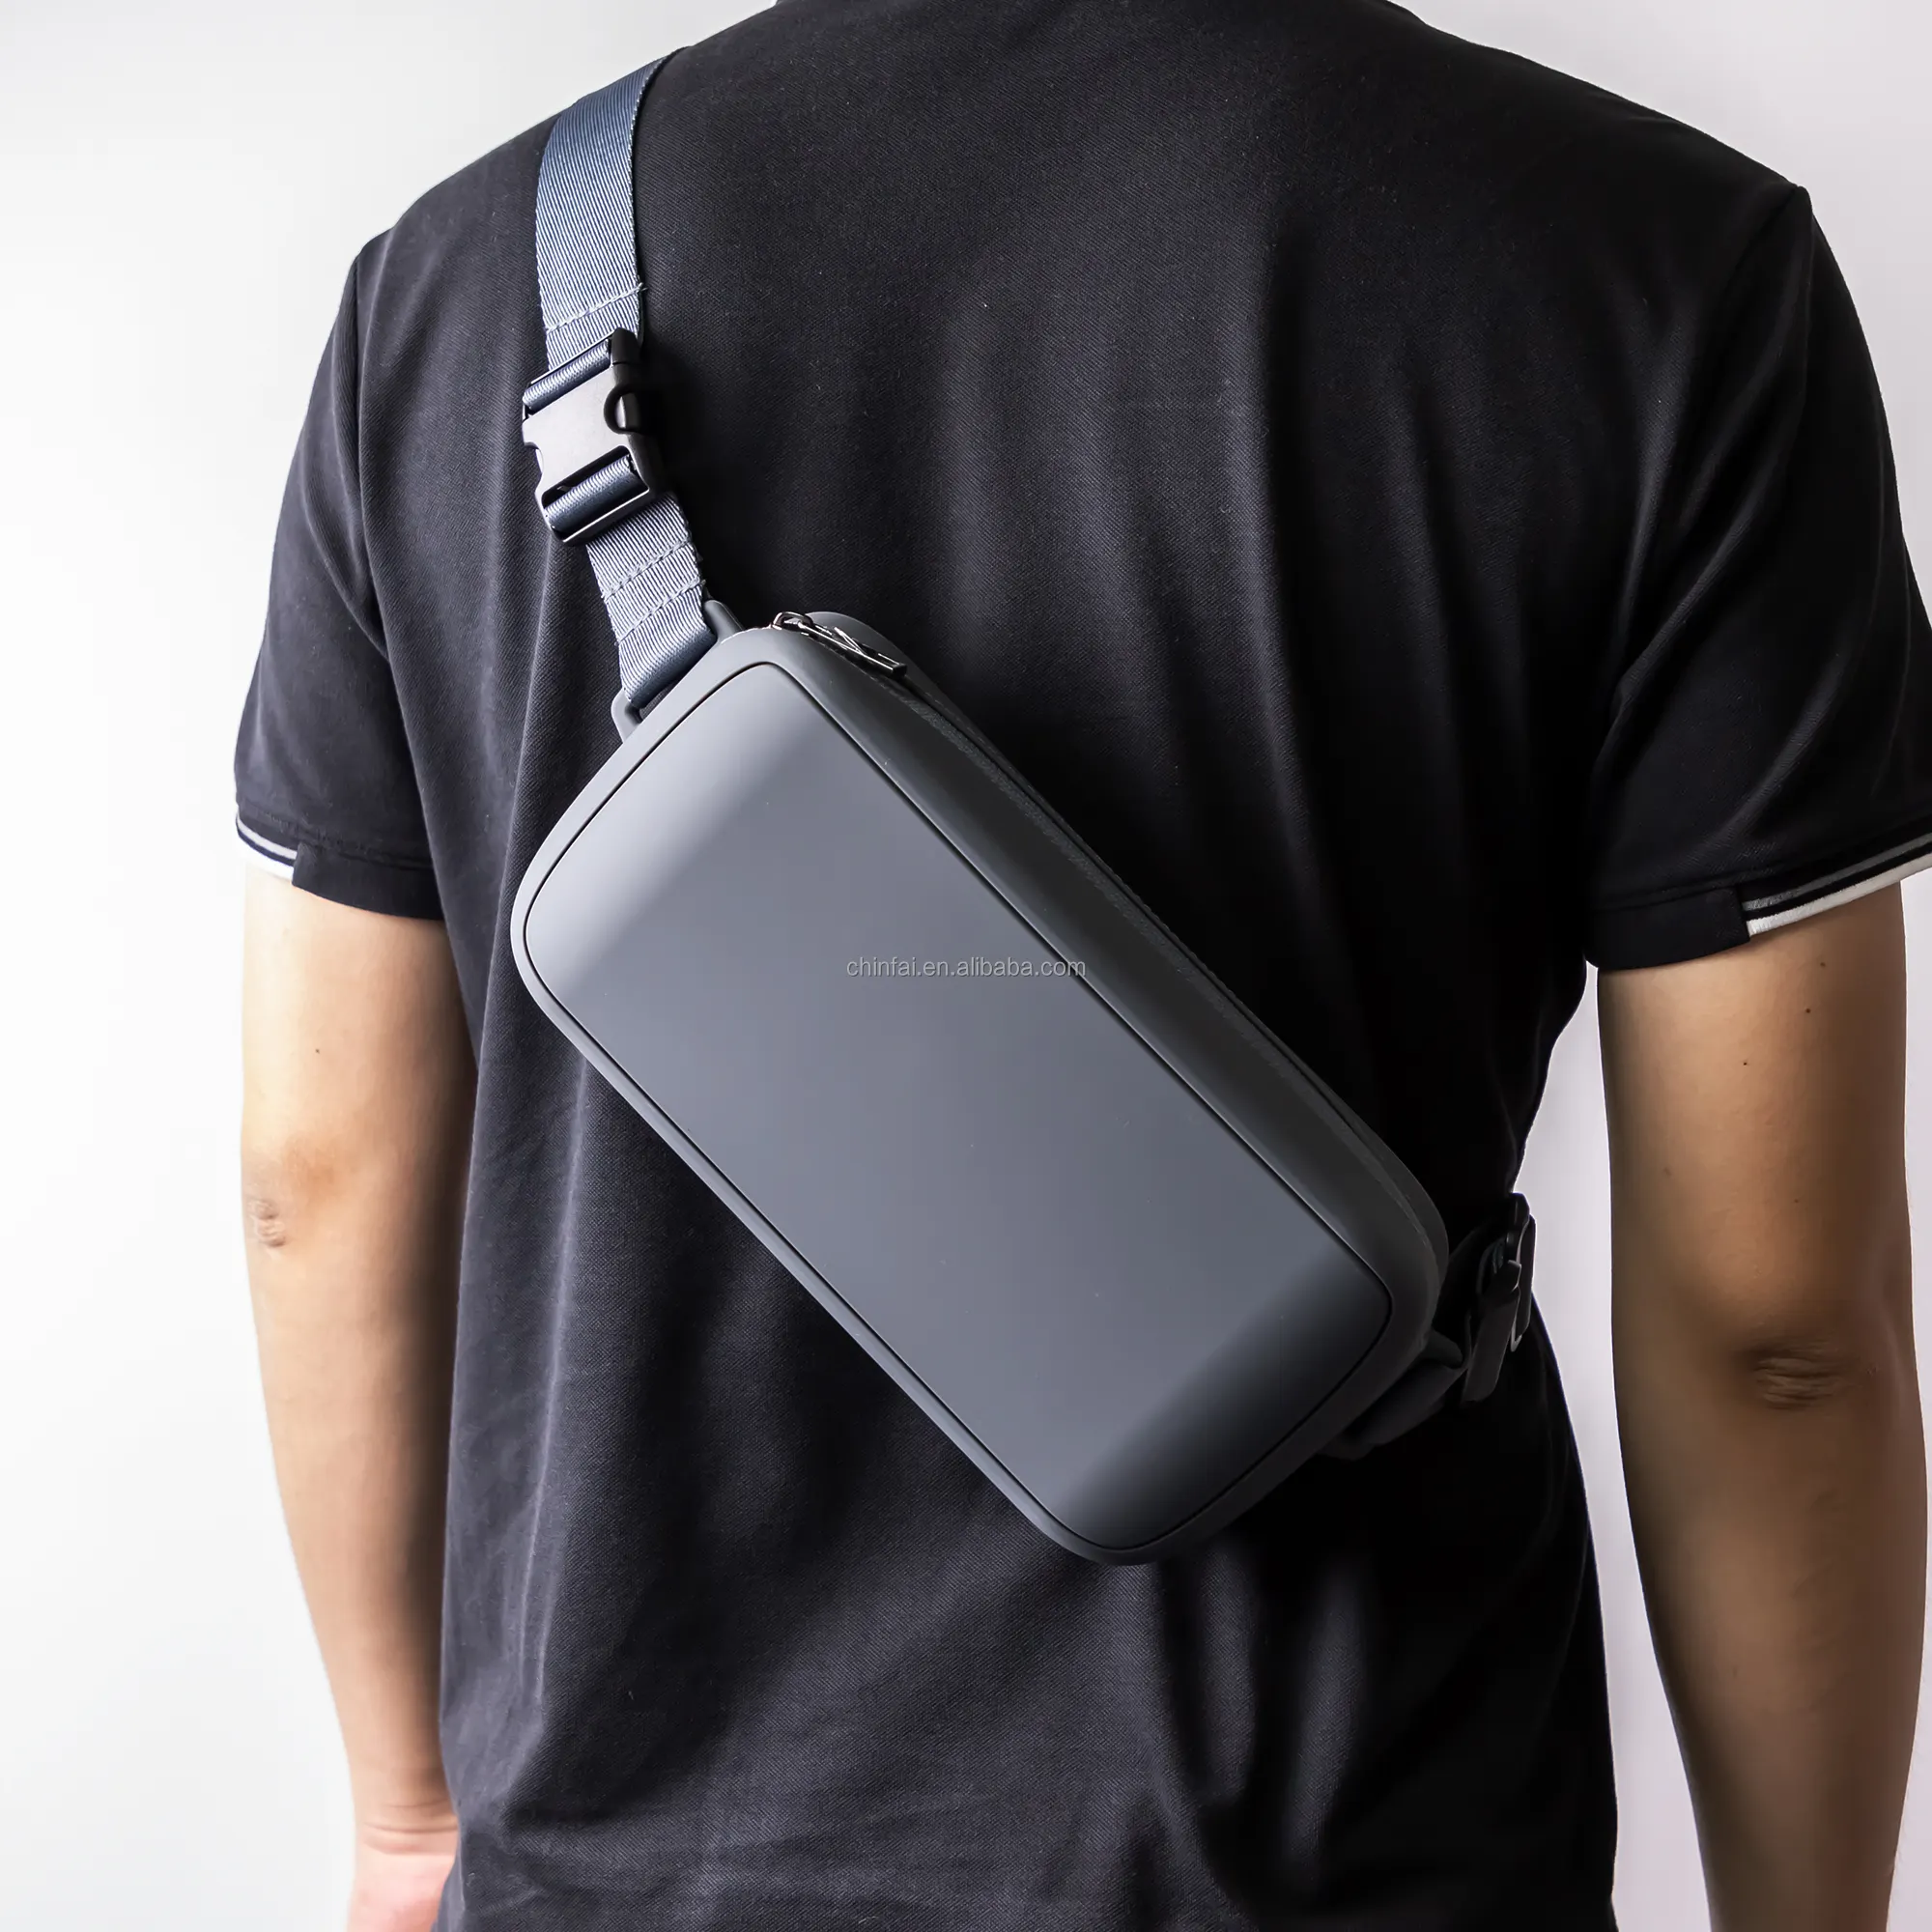 Chinfai New Design Sling Bag Small Backpack Men Waterproof Crossbody Bag Chest Backpack Casual Running Travel Shoulder Bag